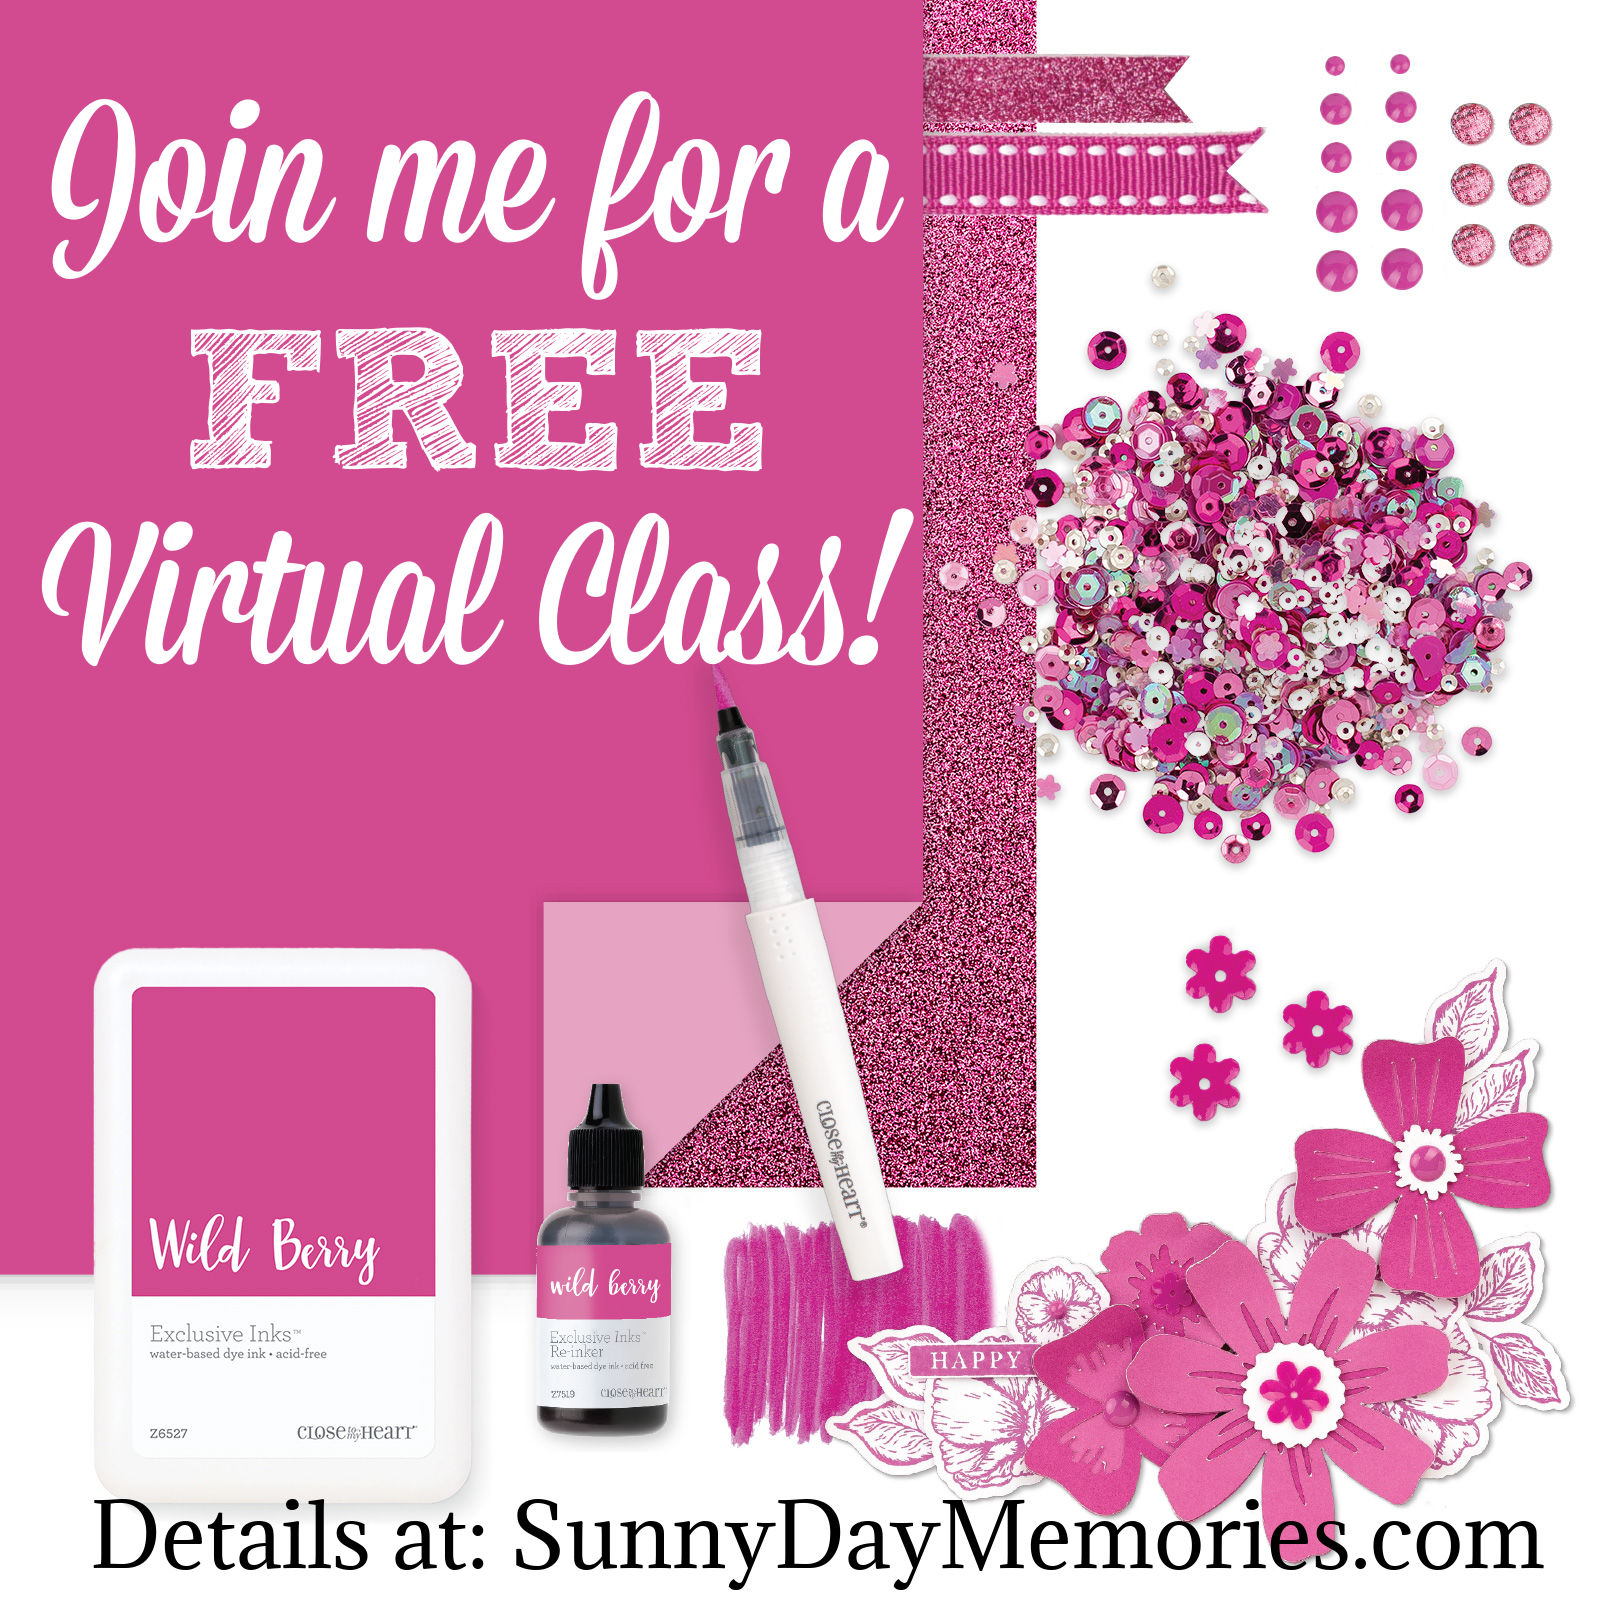 Free Virtual Class